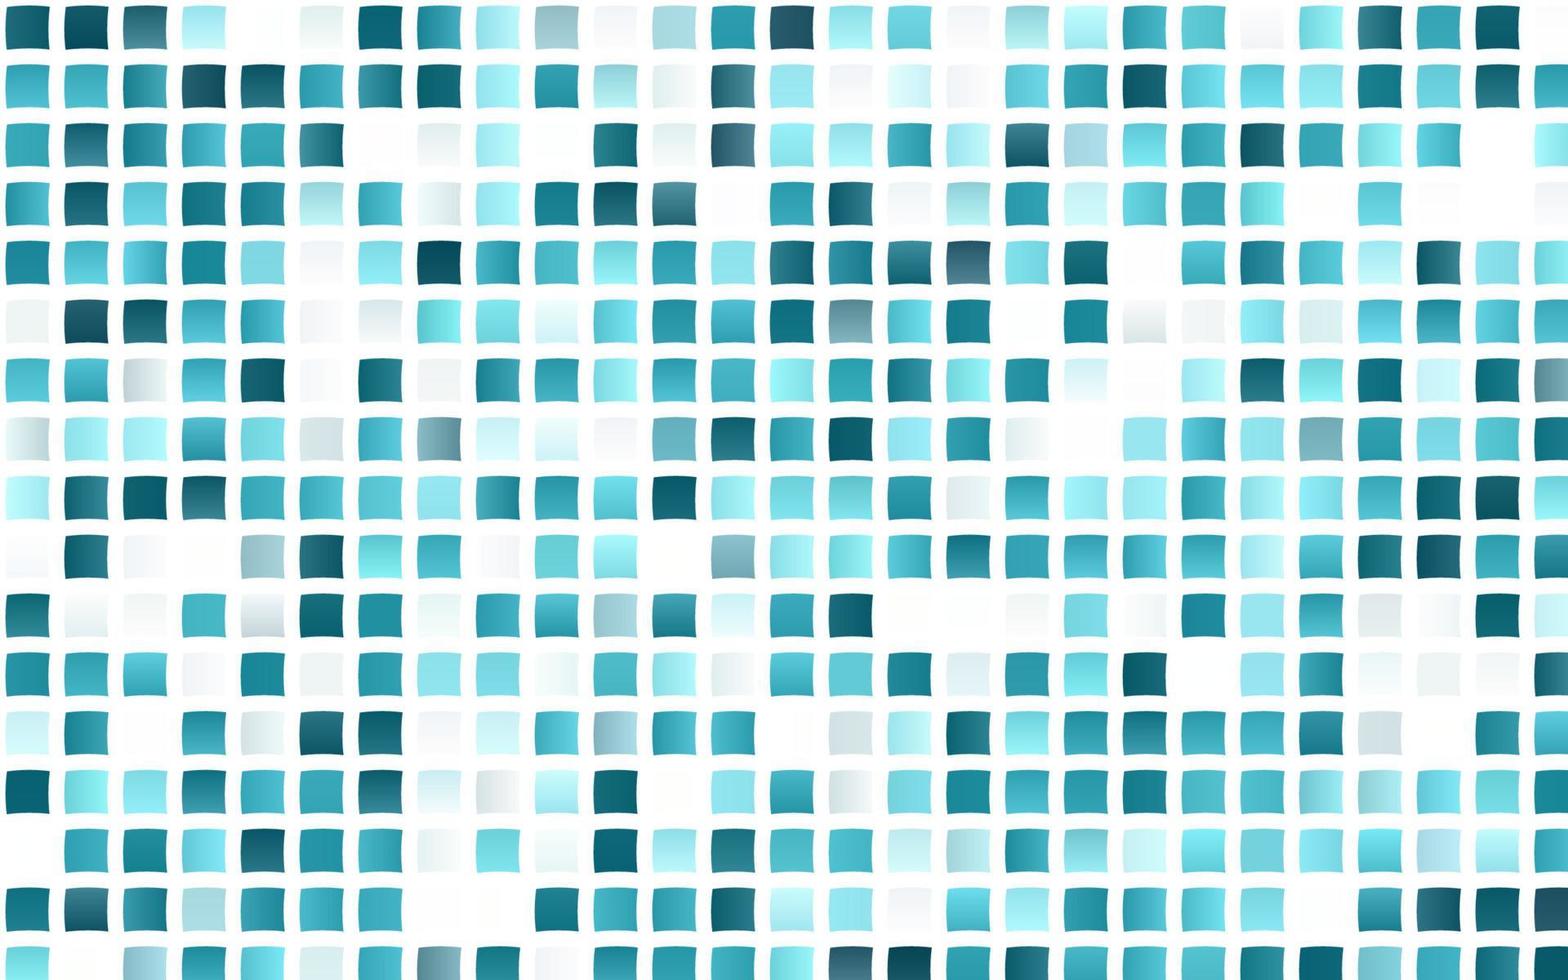 cubierta de vector azul claro en estilo poligonal.